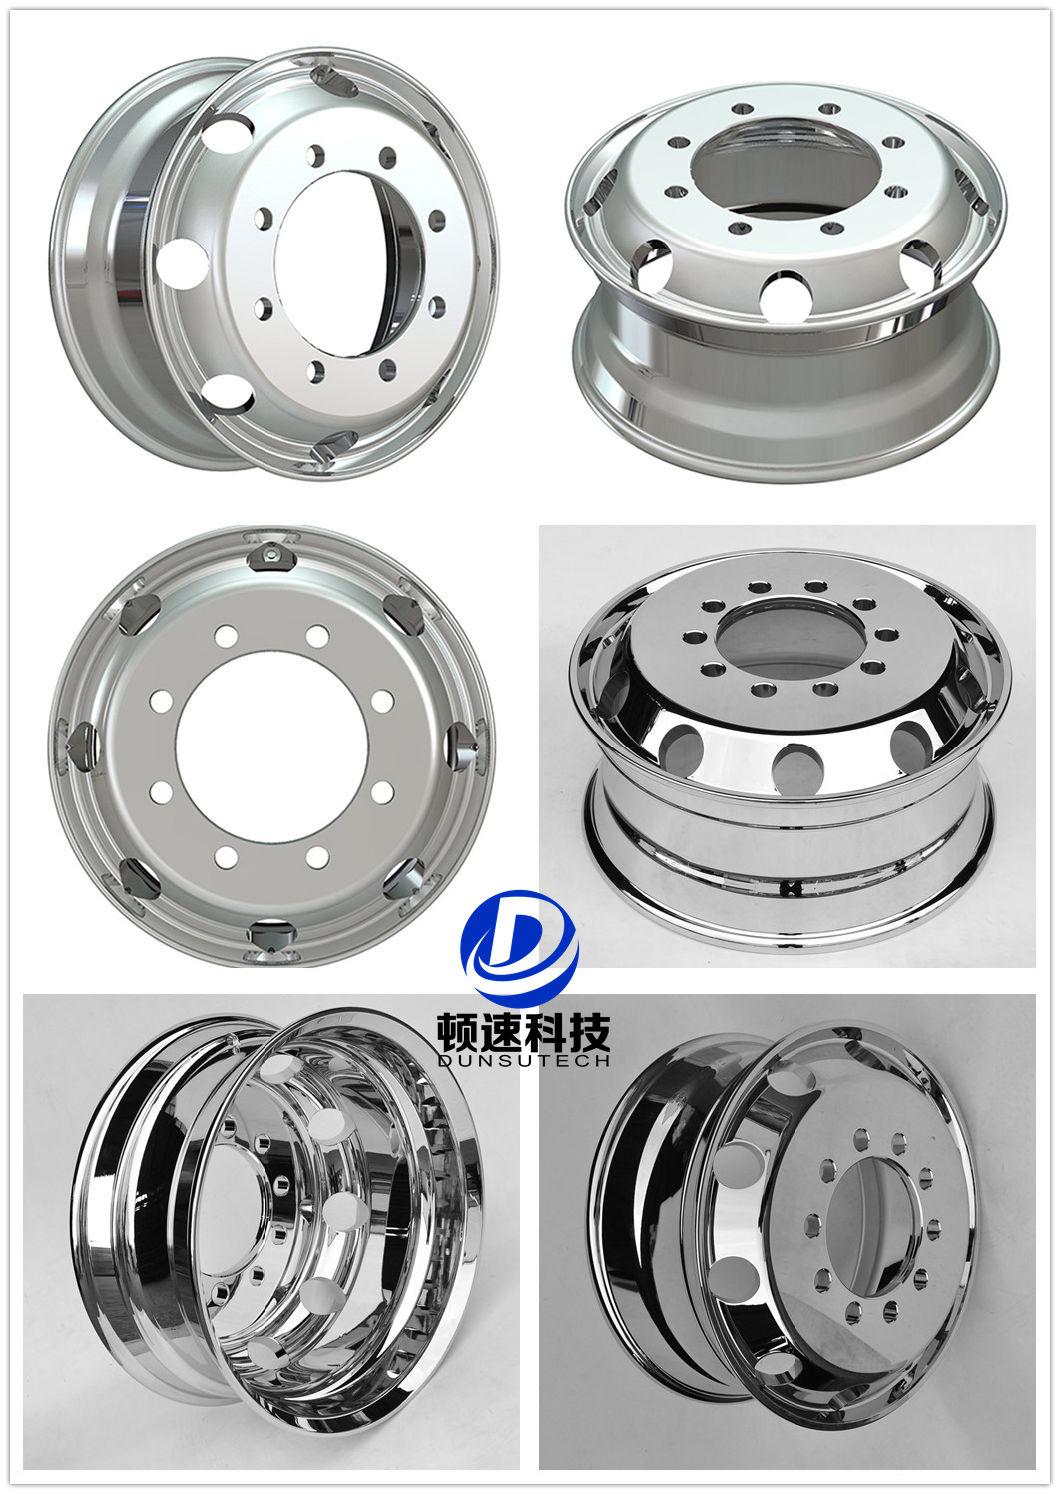 Chrome Rims for Trucks Hot Sale Semi Truck Wheels Chrome High Quality Wheel Truck Steel Alloy